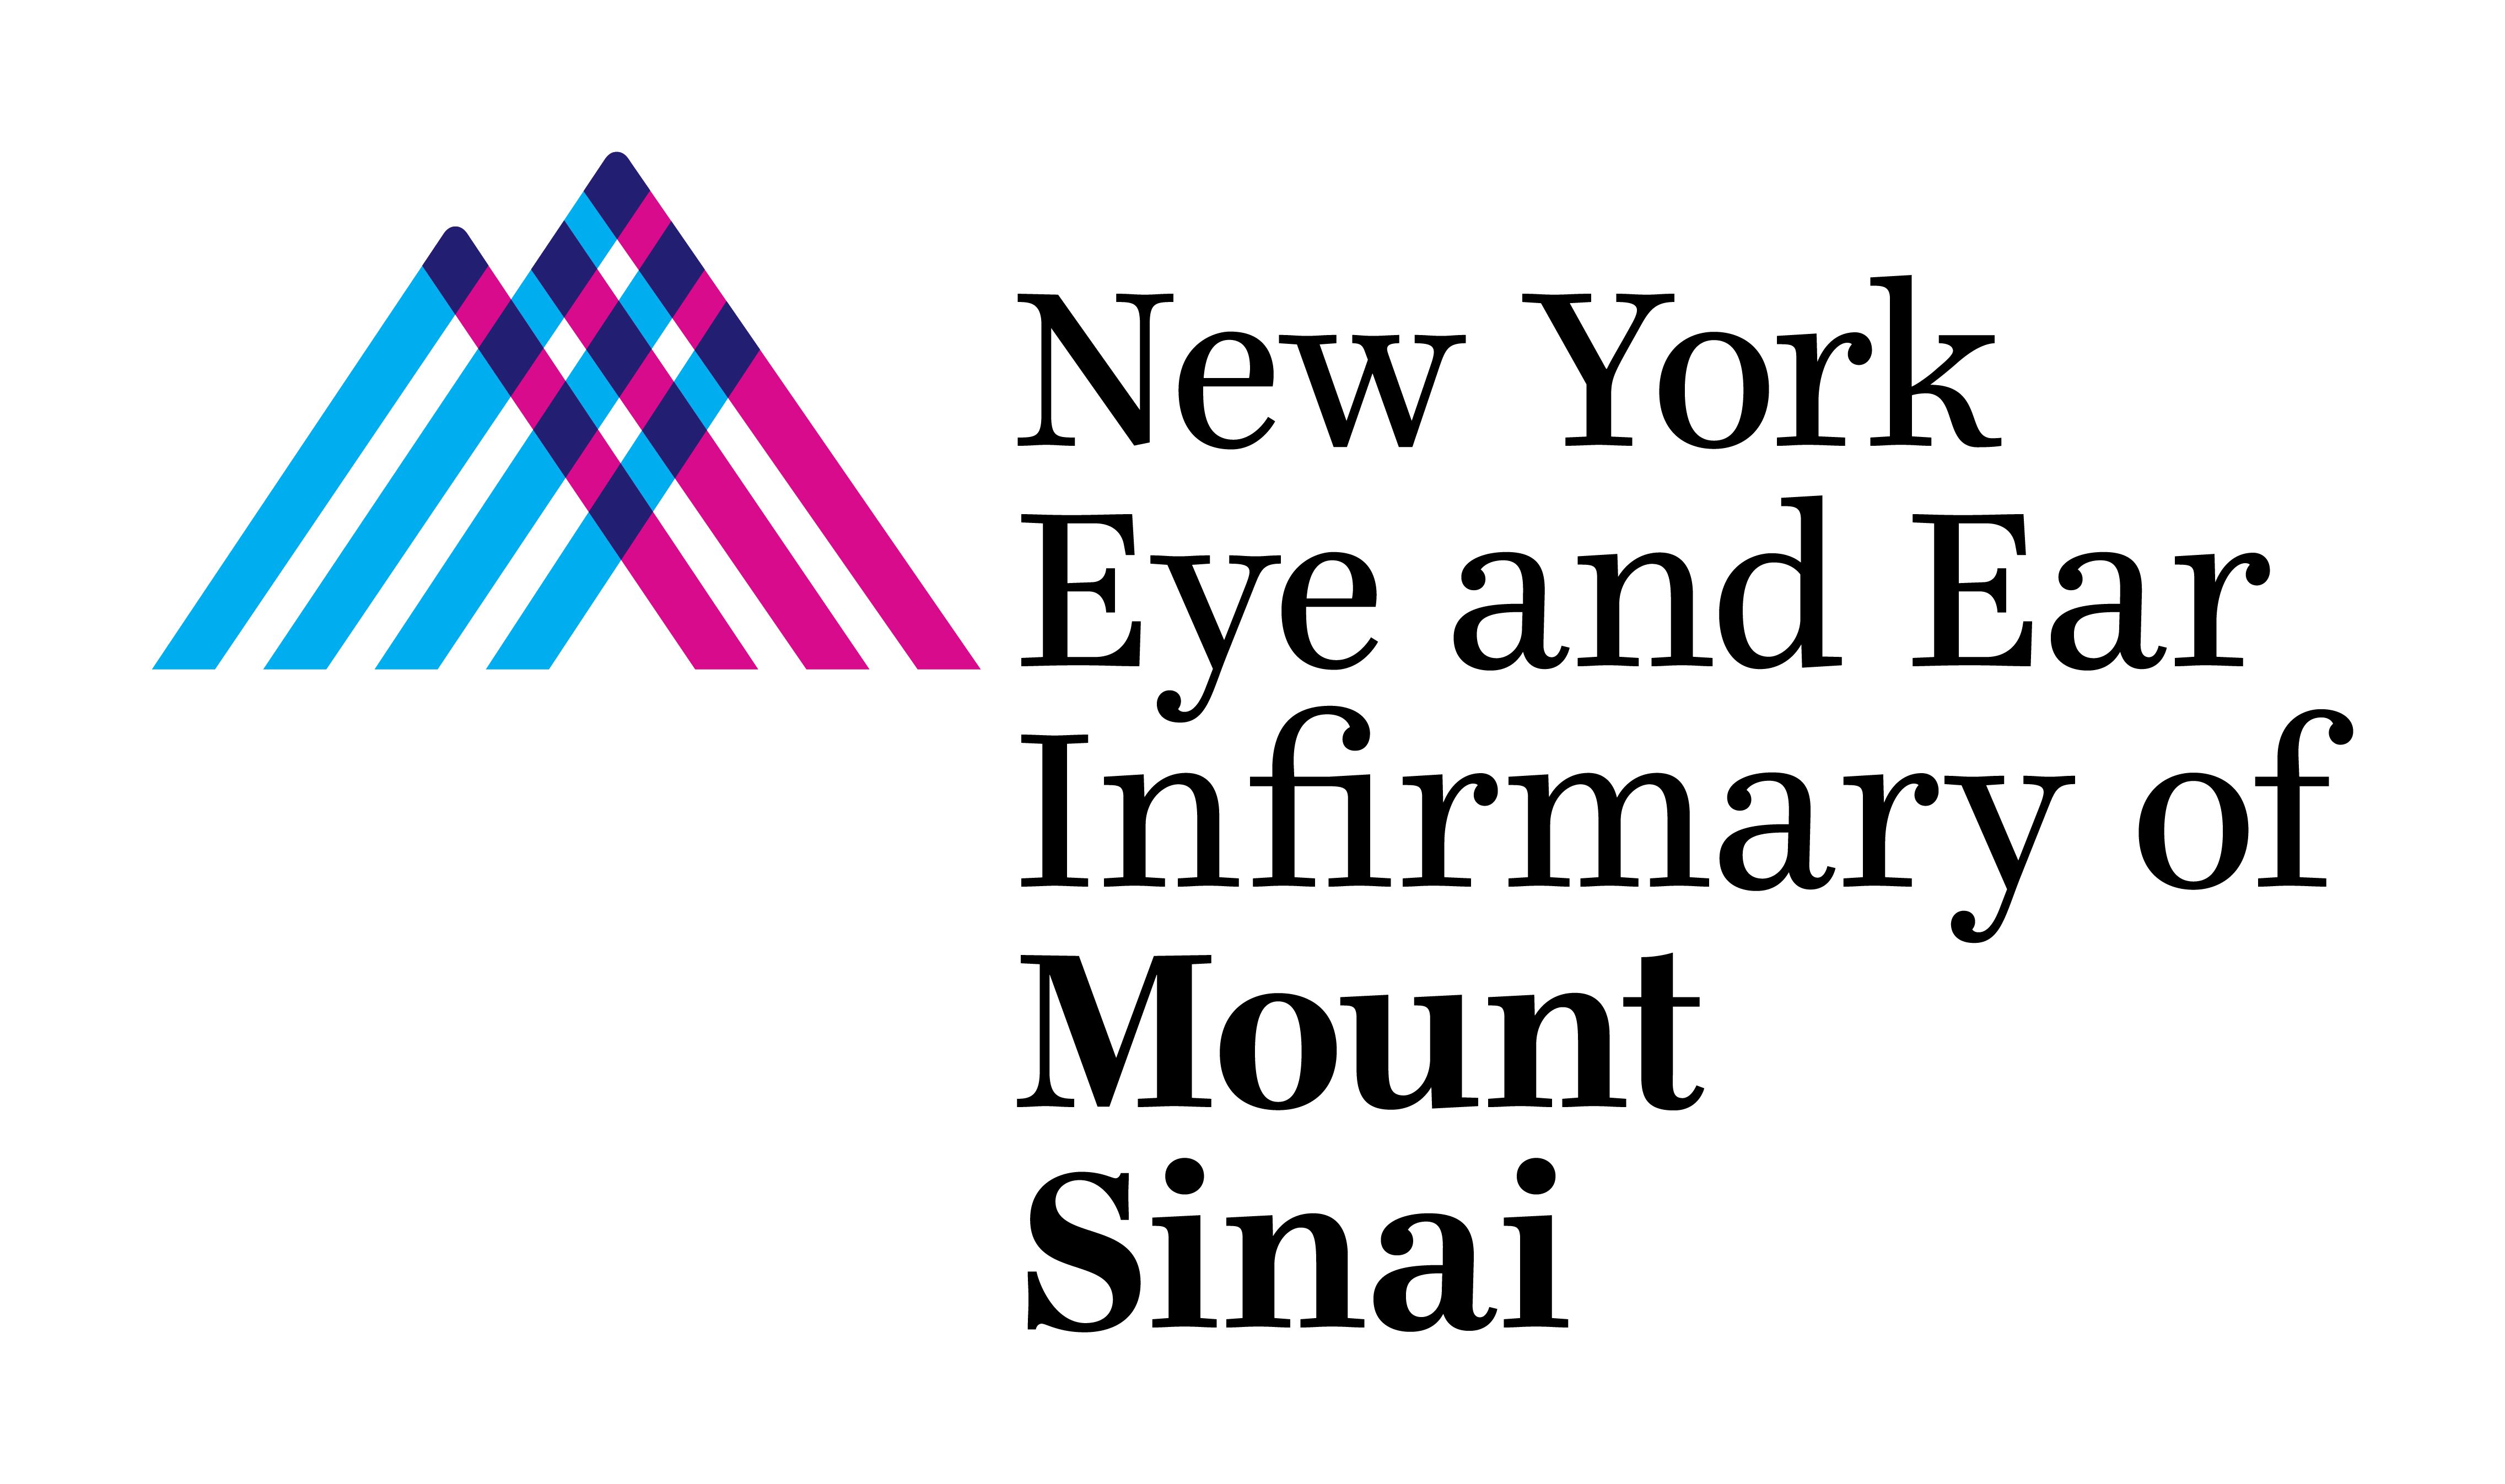 New York Eye and Ear Infirmary of Mount Sinai logo